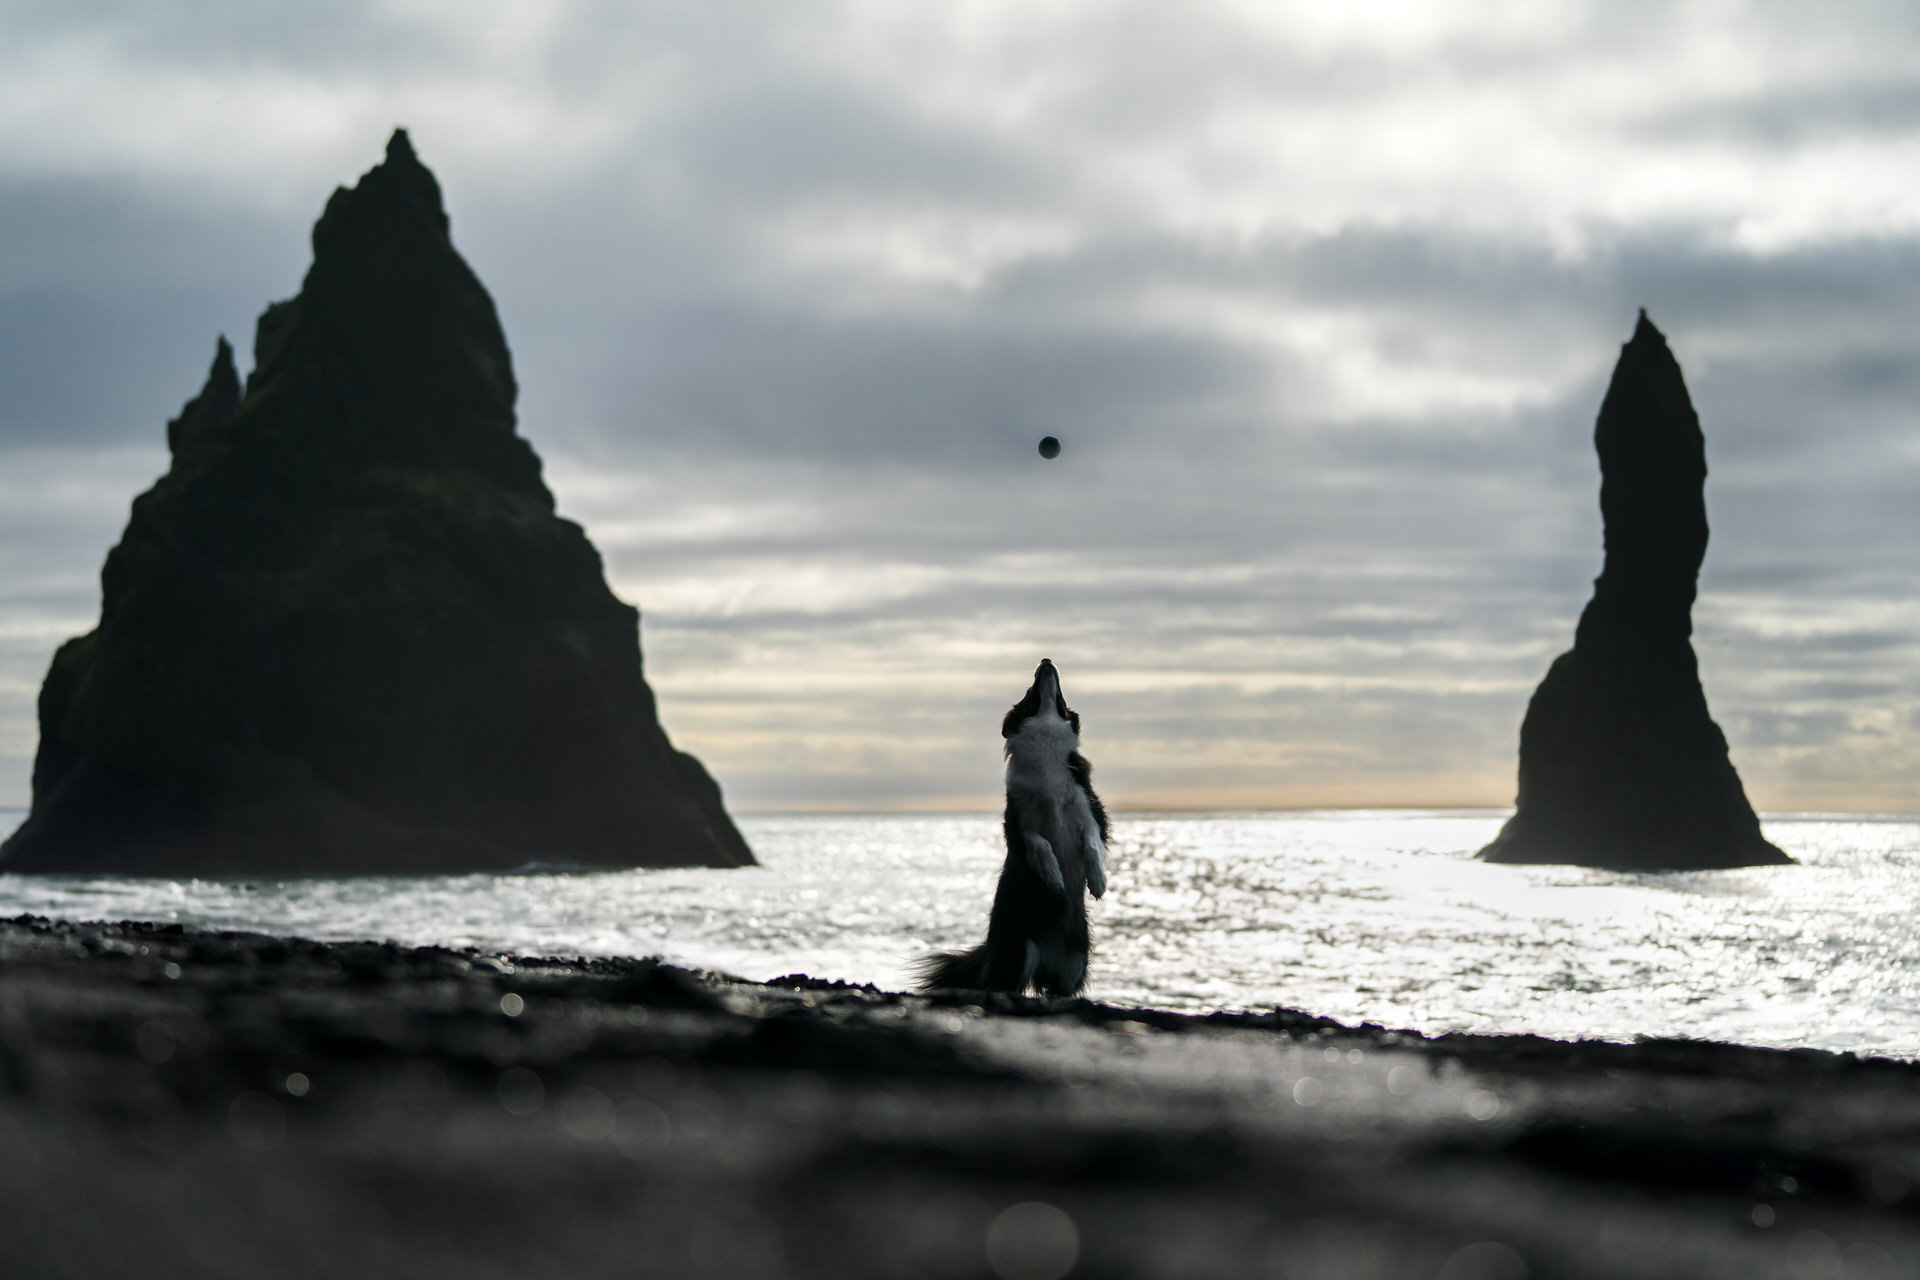 Dog playing with ball on beach by sea stacks at Reynisfjara Black Sand Beach, Iceland